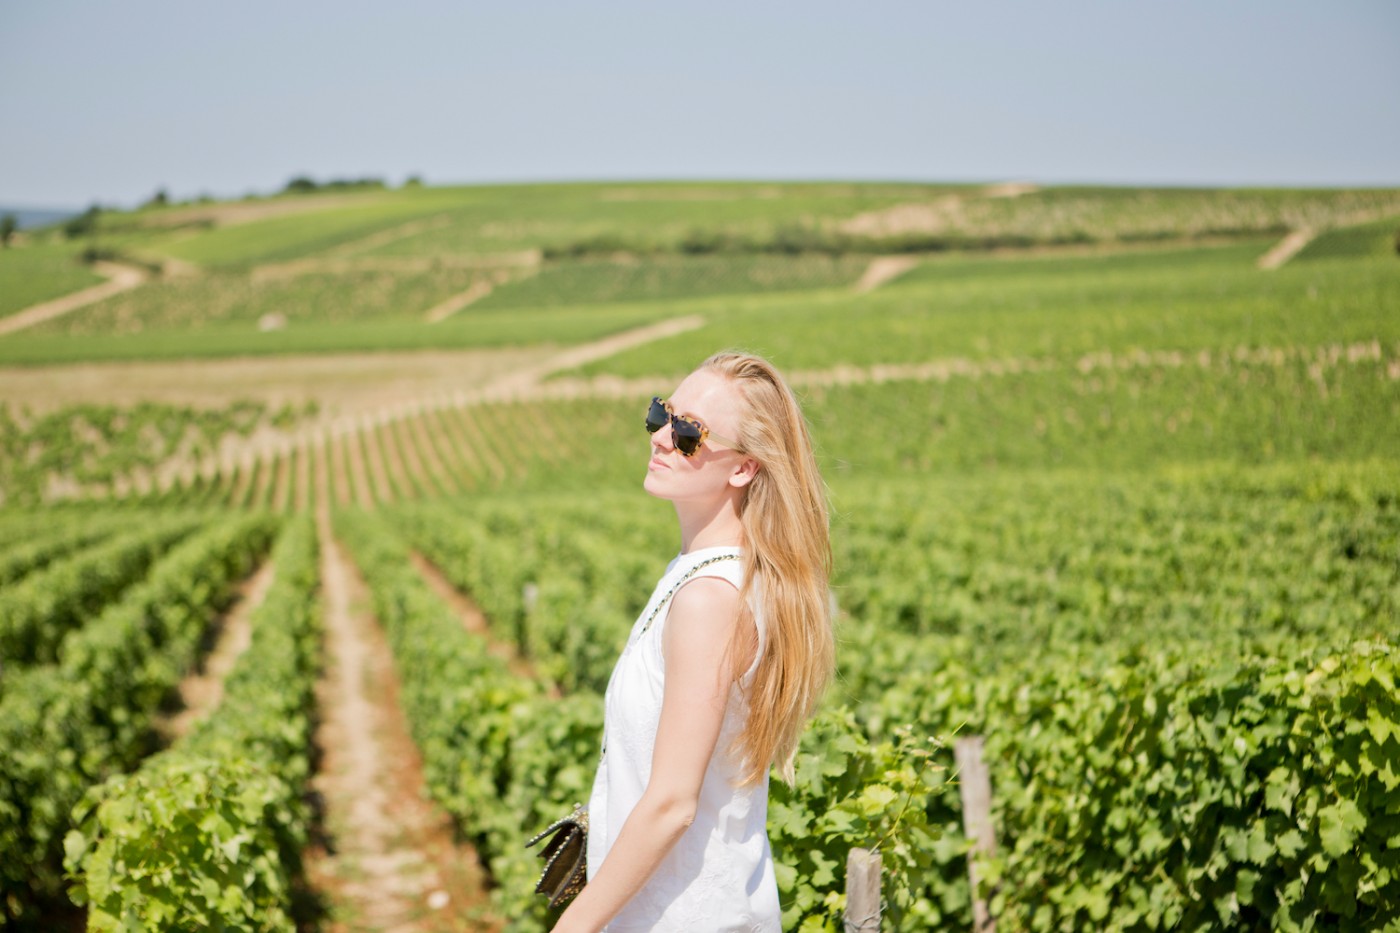 The Golden Bun | wineyard France, Pouilly vinoble, white dress, München Modeblog, German Fashion Blog, Fashionblogger, new trends